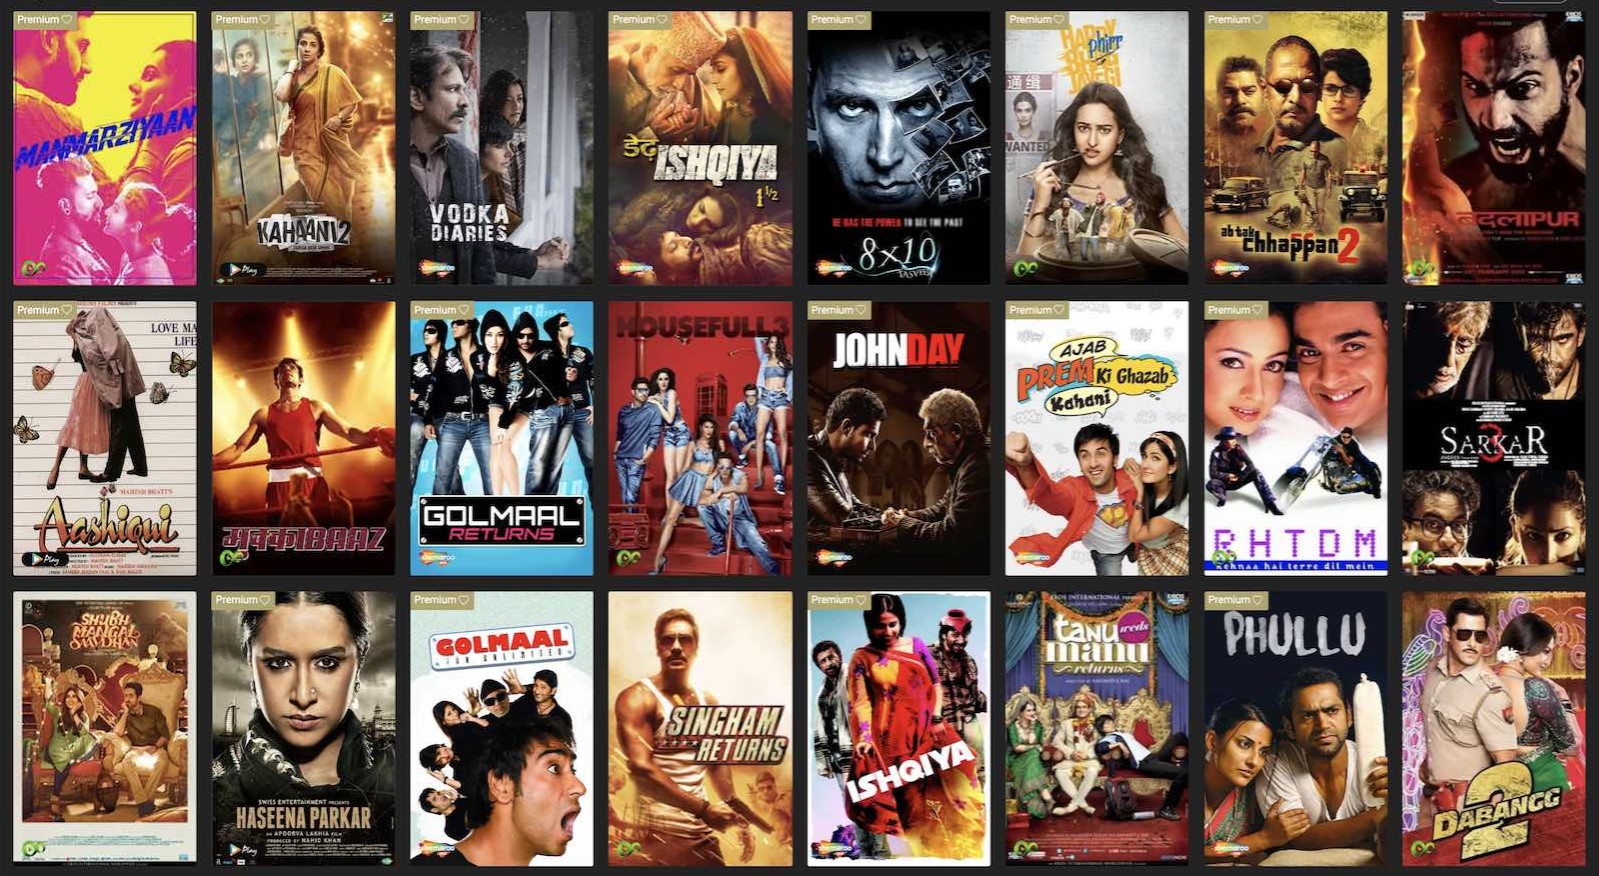 9kmovies Website 2022 - Hindi Latest Movies Download